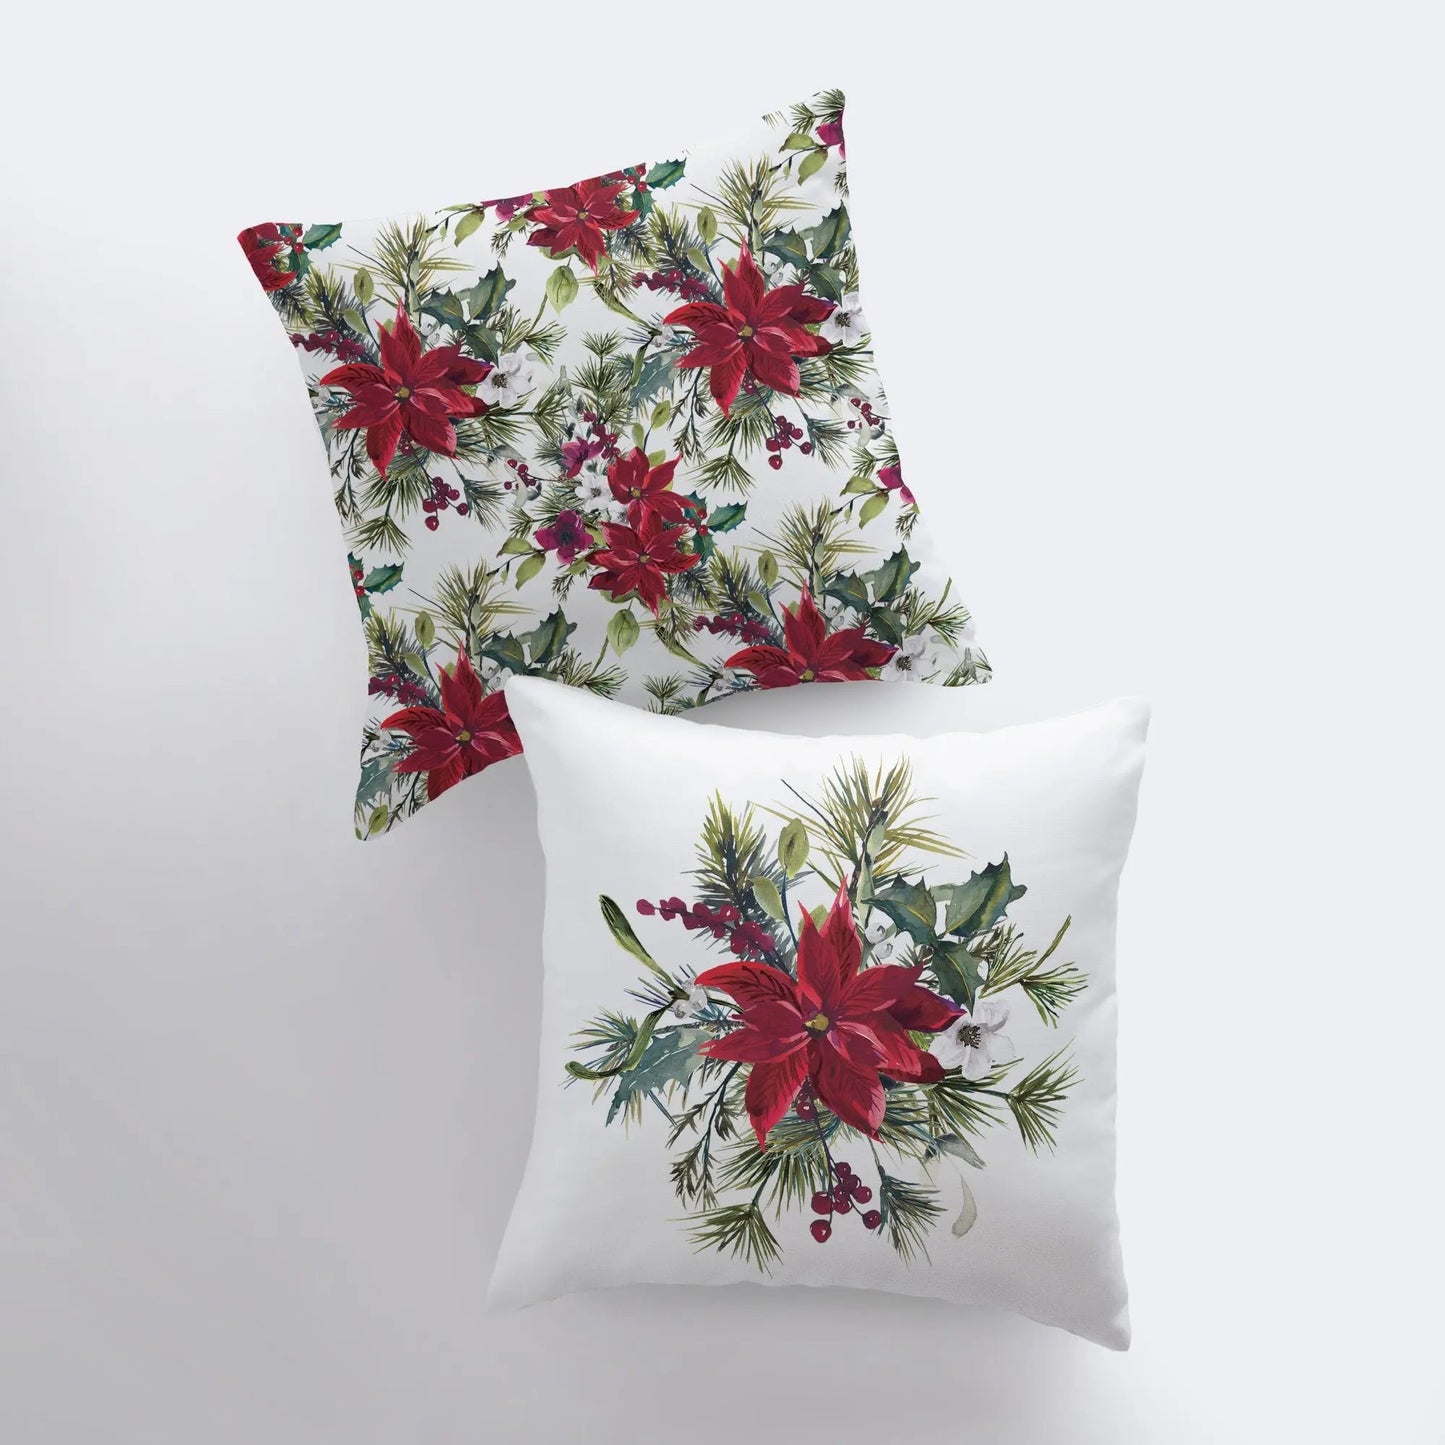 Christmas Poinsettia with Holly Throw Pillow Cover | Holiday Decor | Christmas Throw Pillow | Christmas Home Decor | Elegant Luxury Decor by UniikPillows